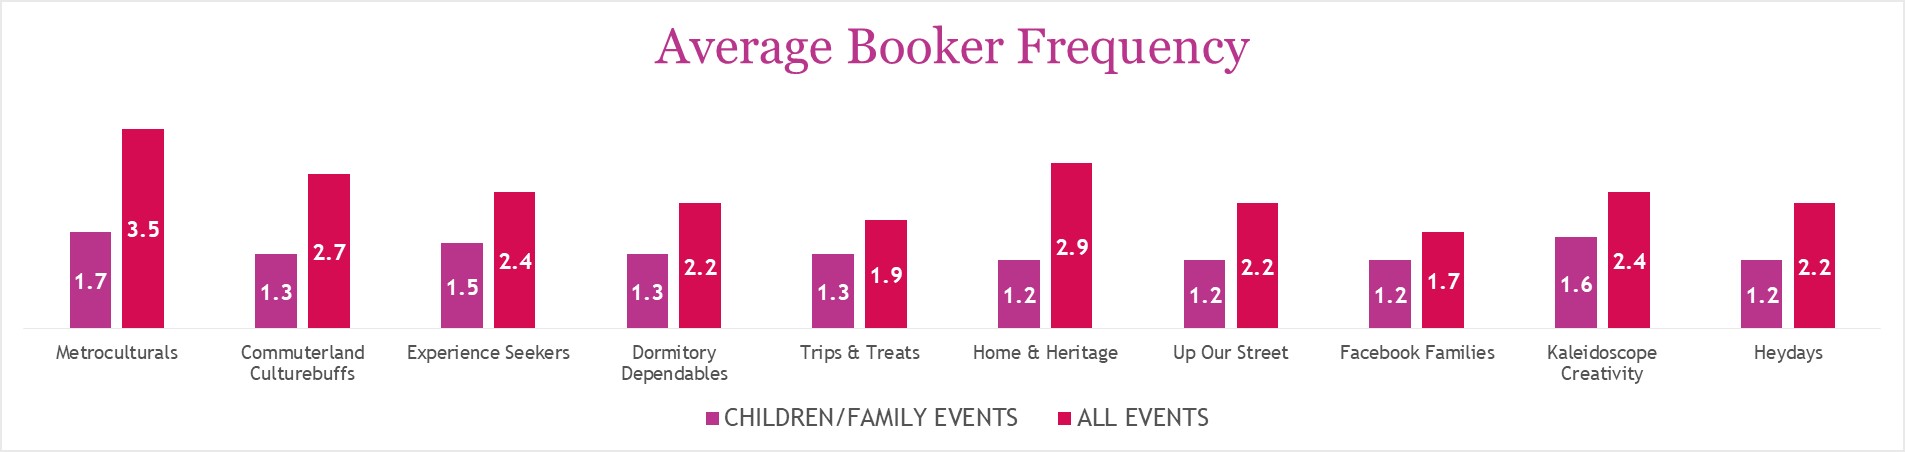 Average Booker Frequency.jpg